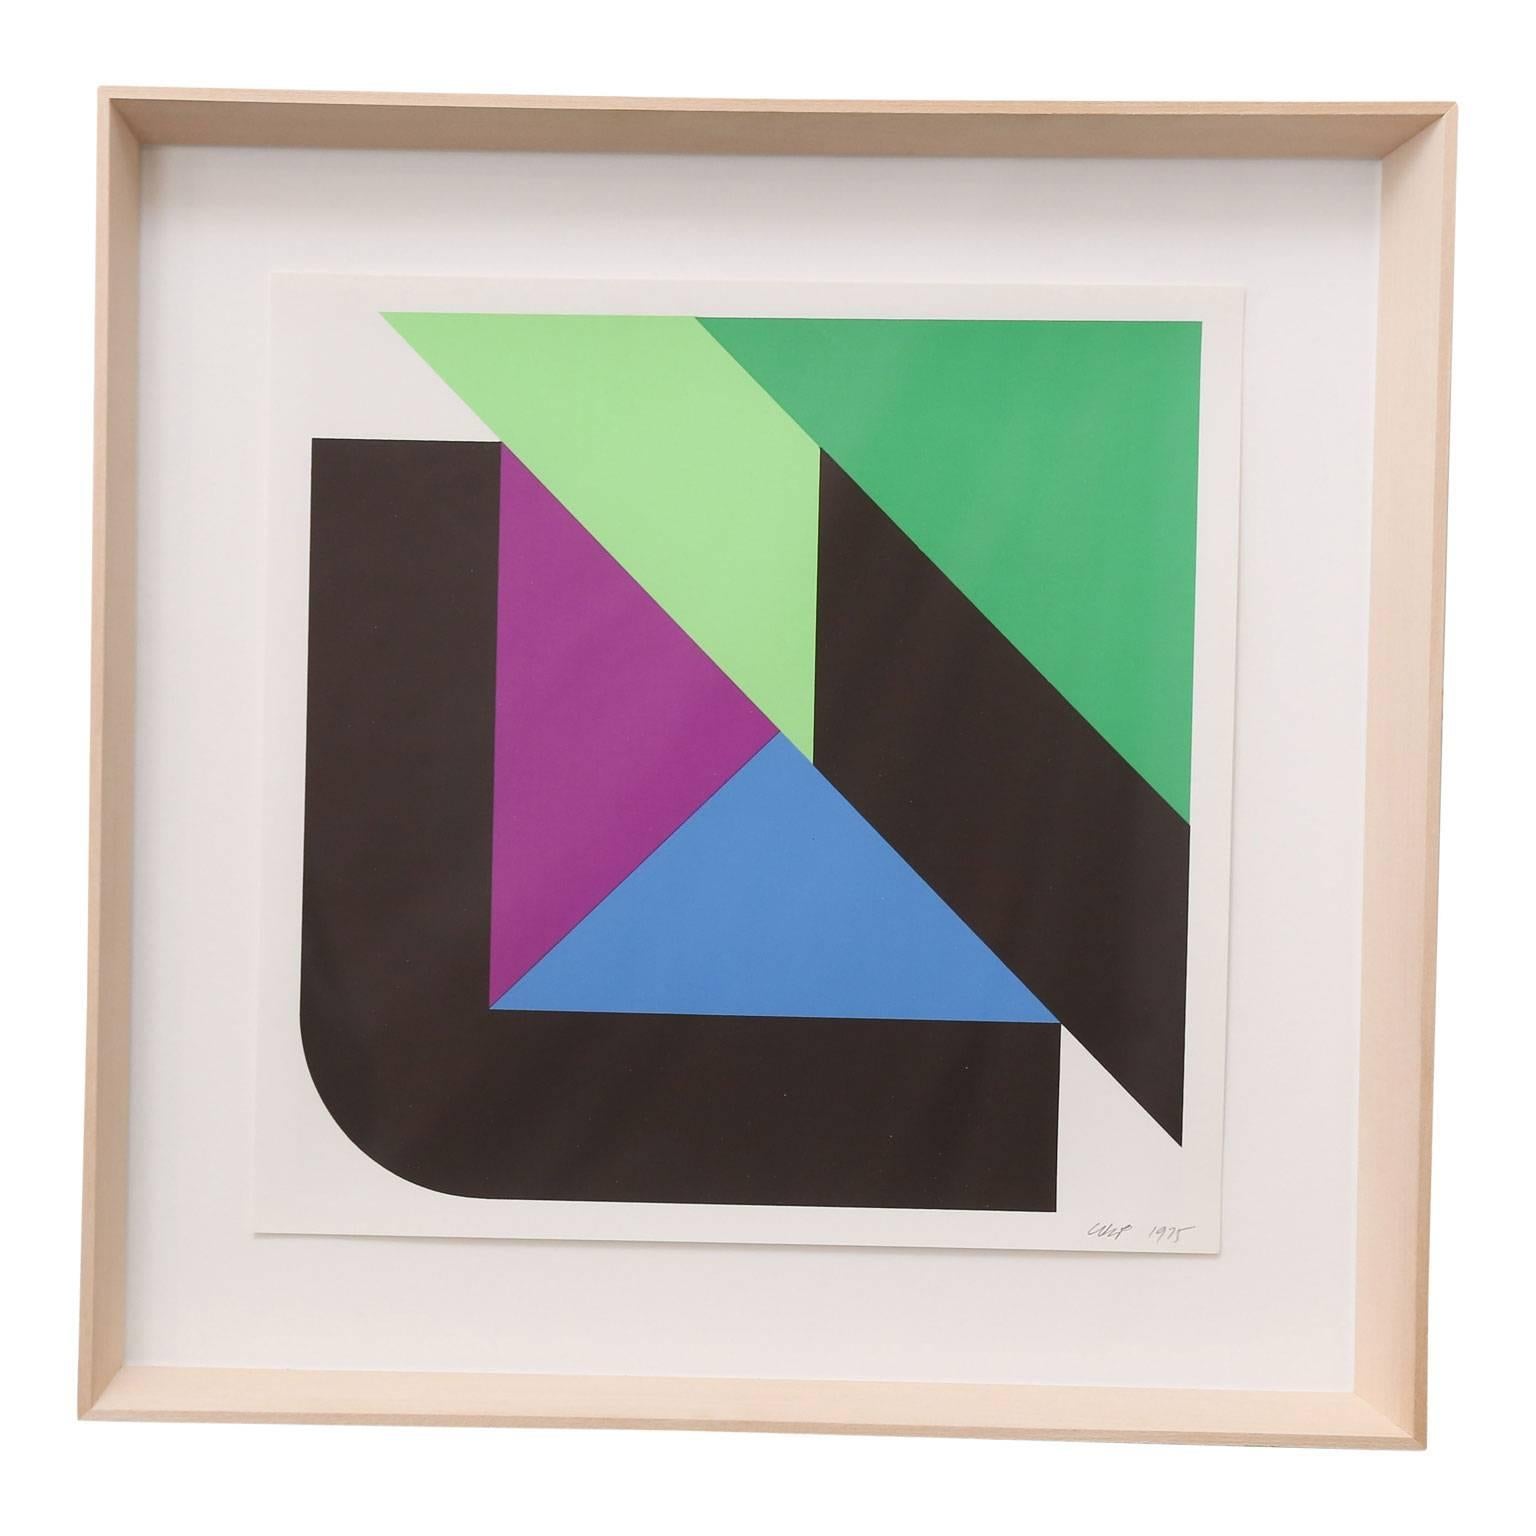 Framed serigraphs (silk-screen on paper), from a series of geometric abstractions by Georg Karl Pfahler (1926-2002). Published as a limited edition portfolio in 'G.K. Pfahler: Werkverzeichnis der Druckgrafik